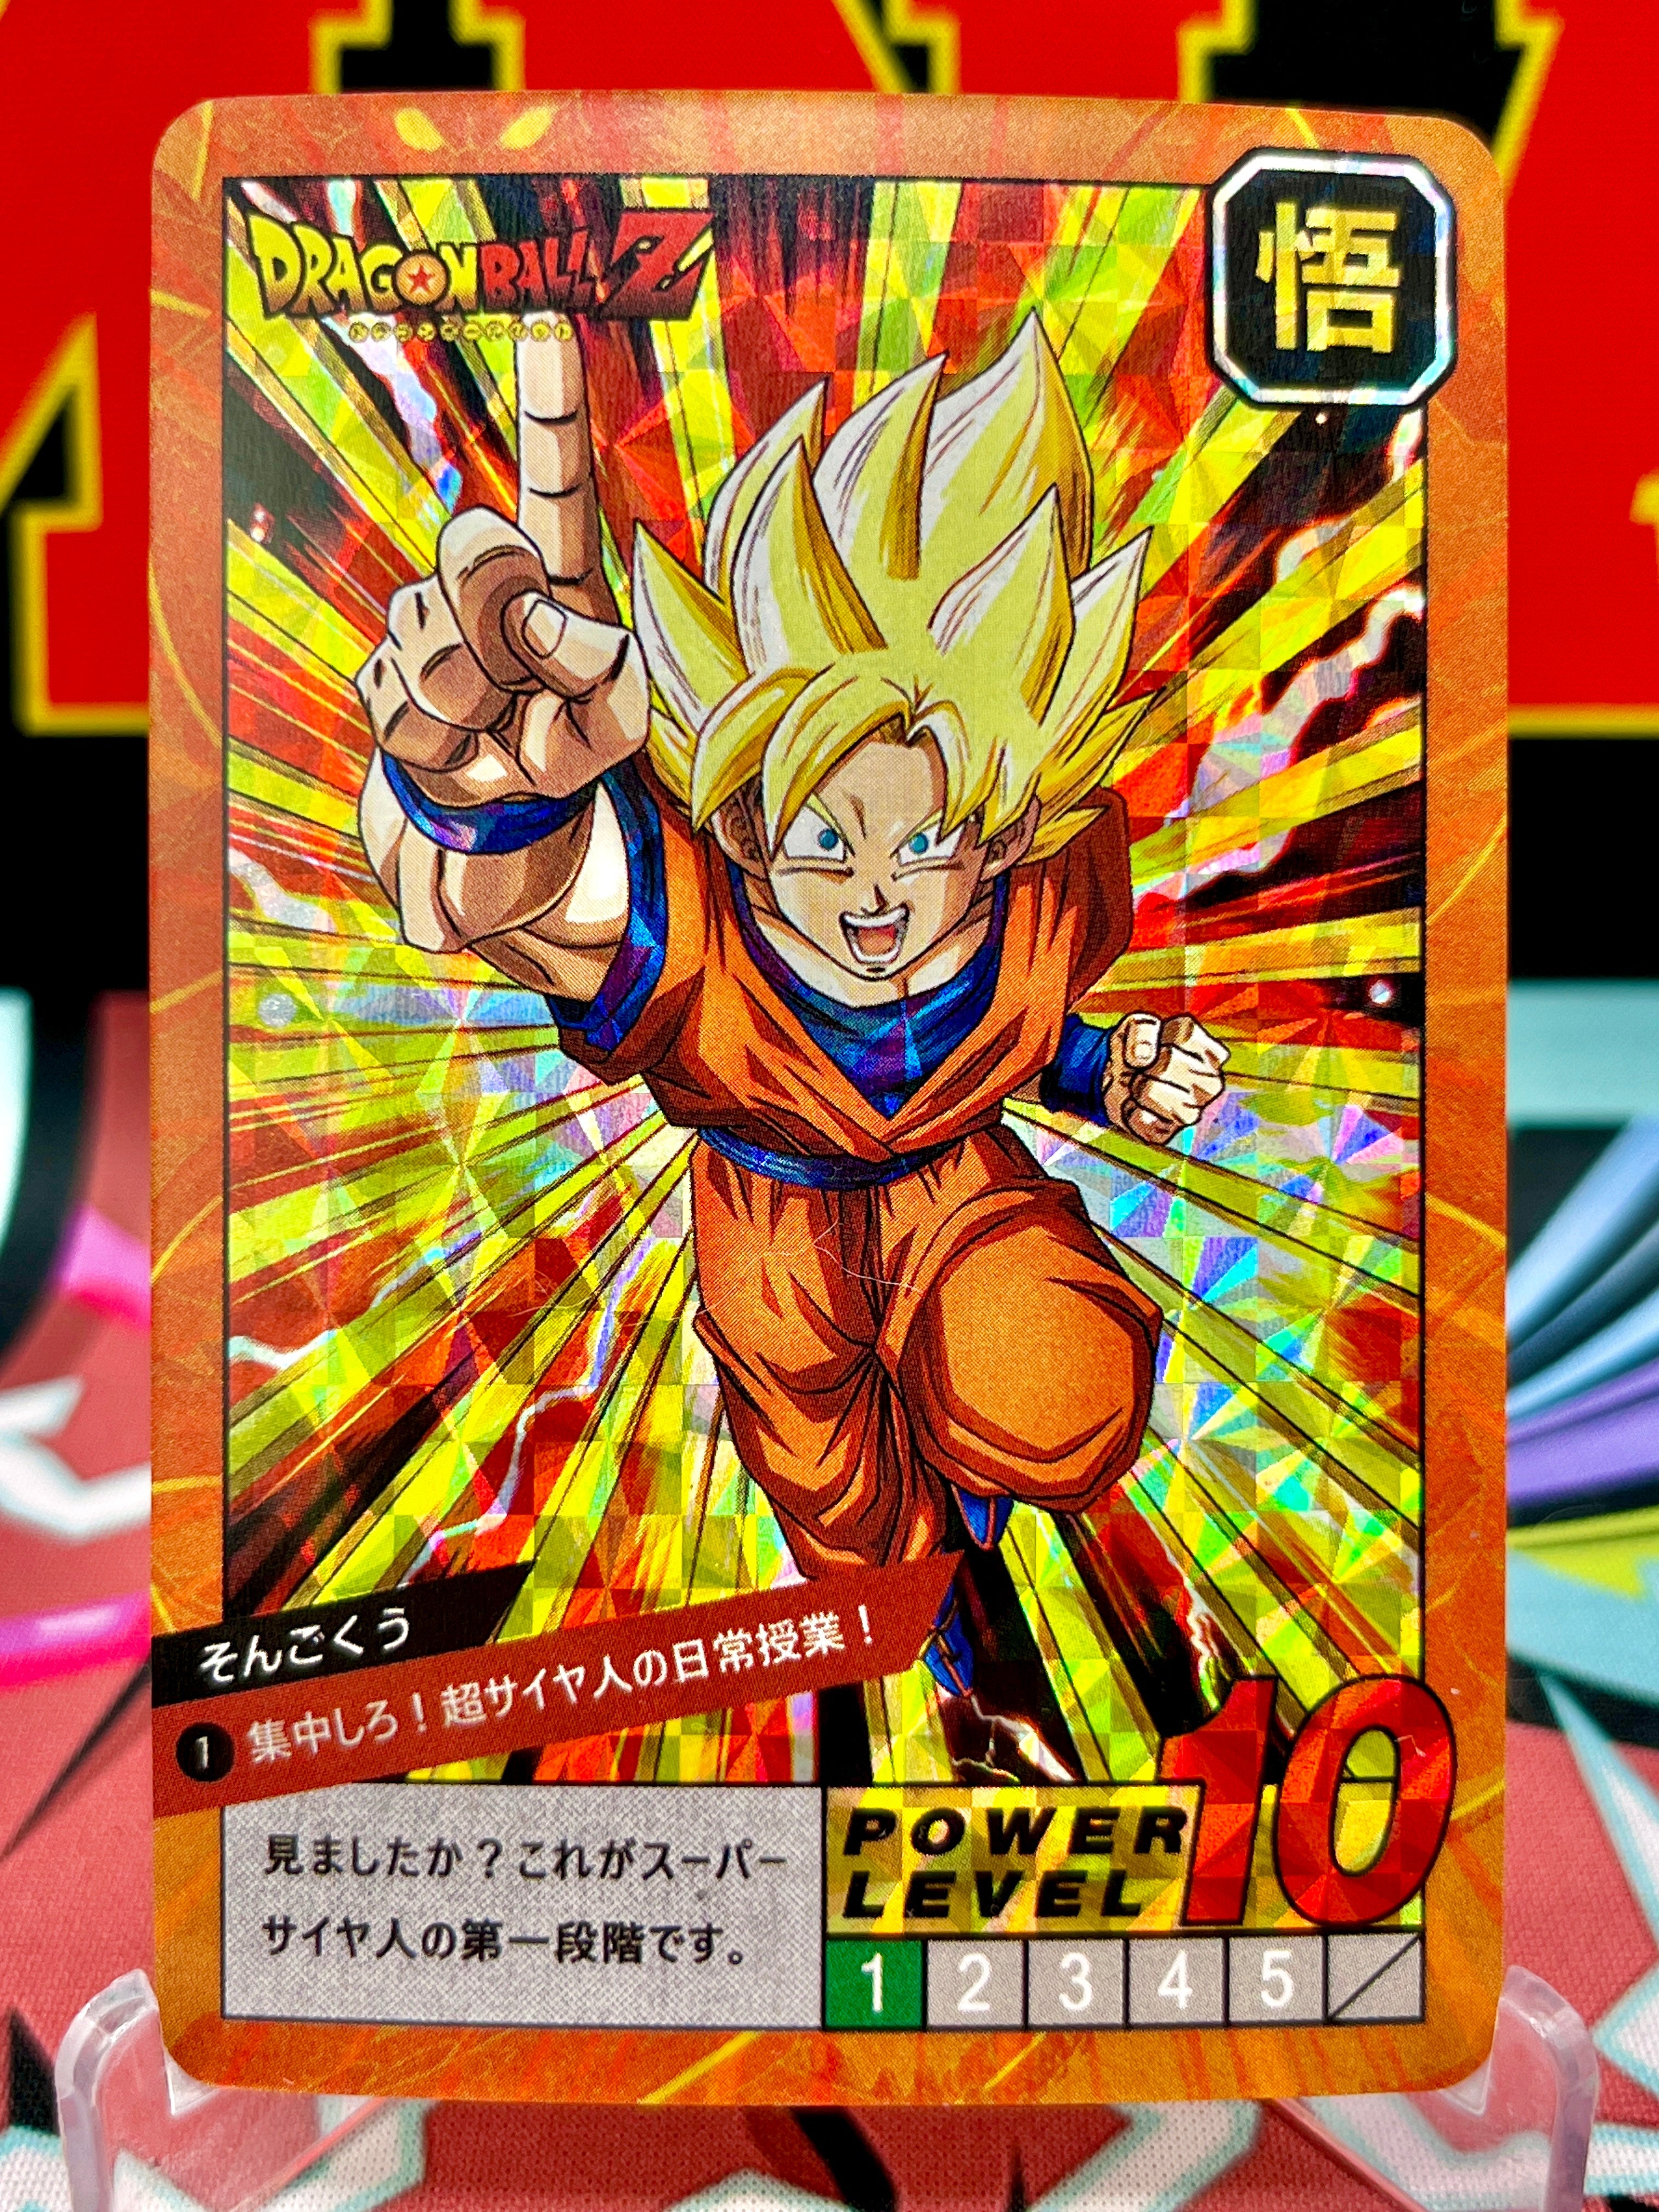 DBCA4-01 Son Goku Art Card